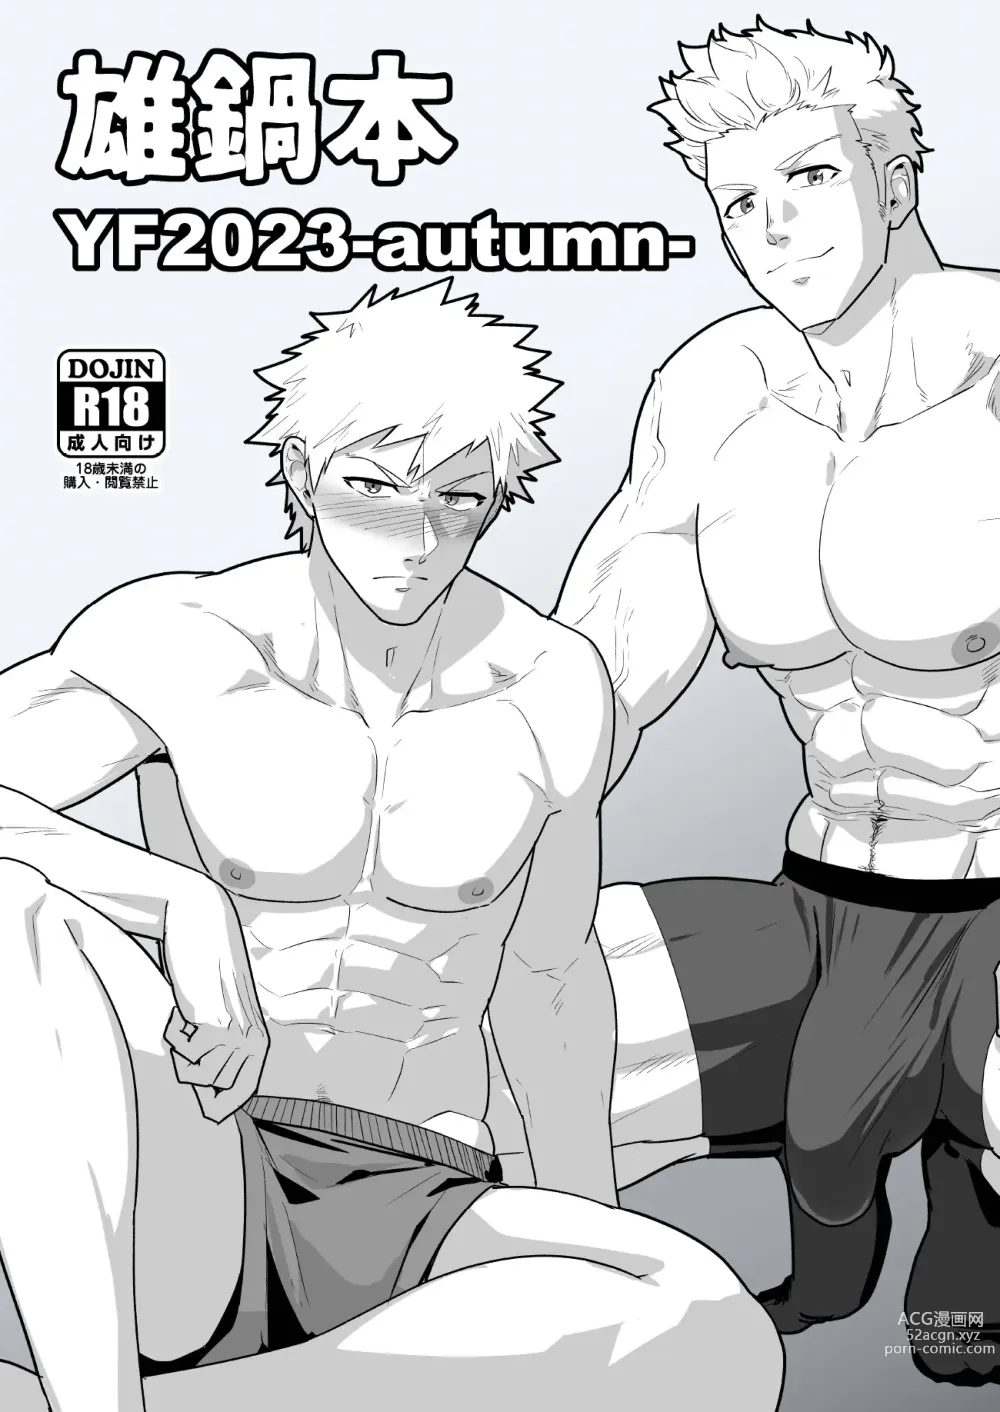 Page 1 of doujinshi Onabe Hon YF2023 -autumn-